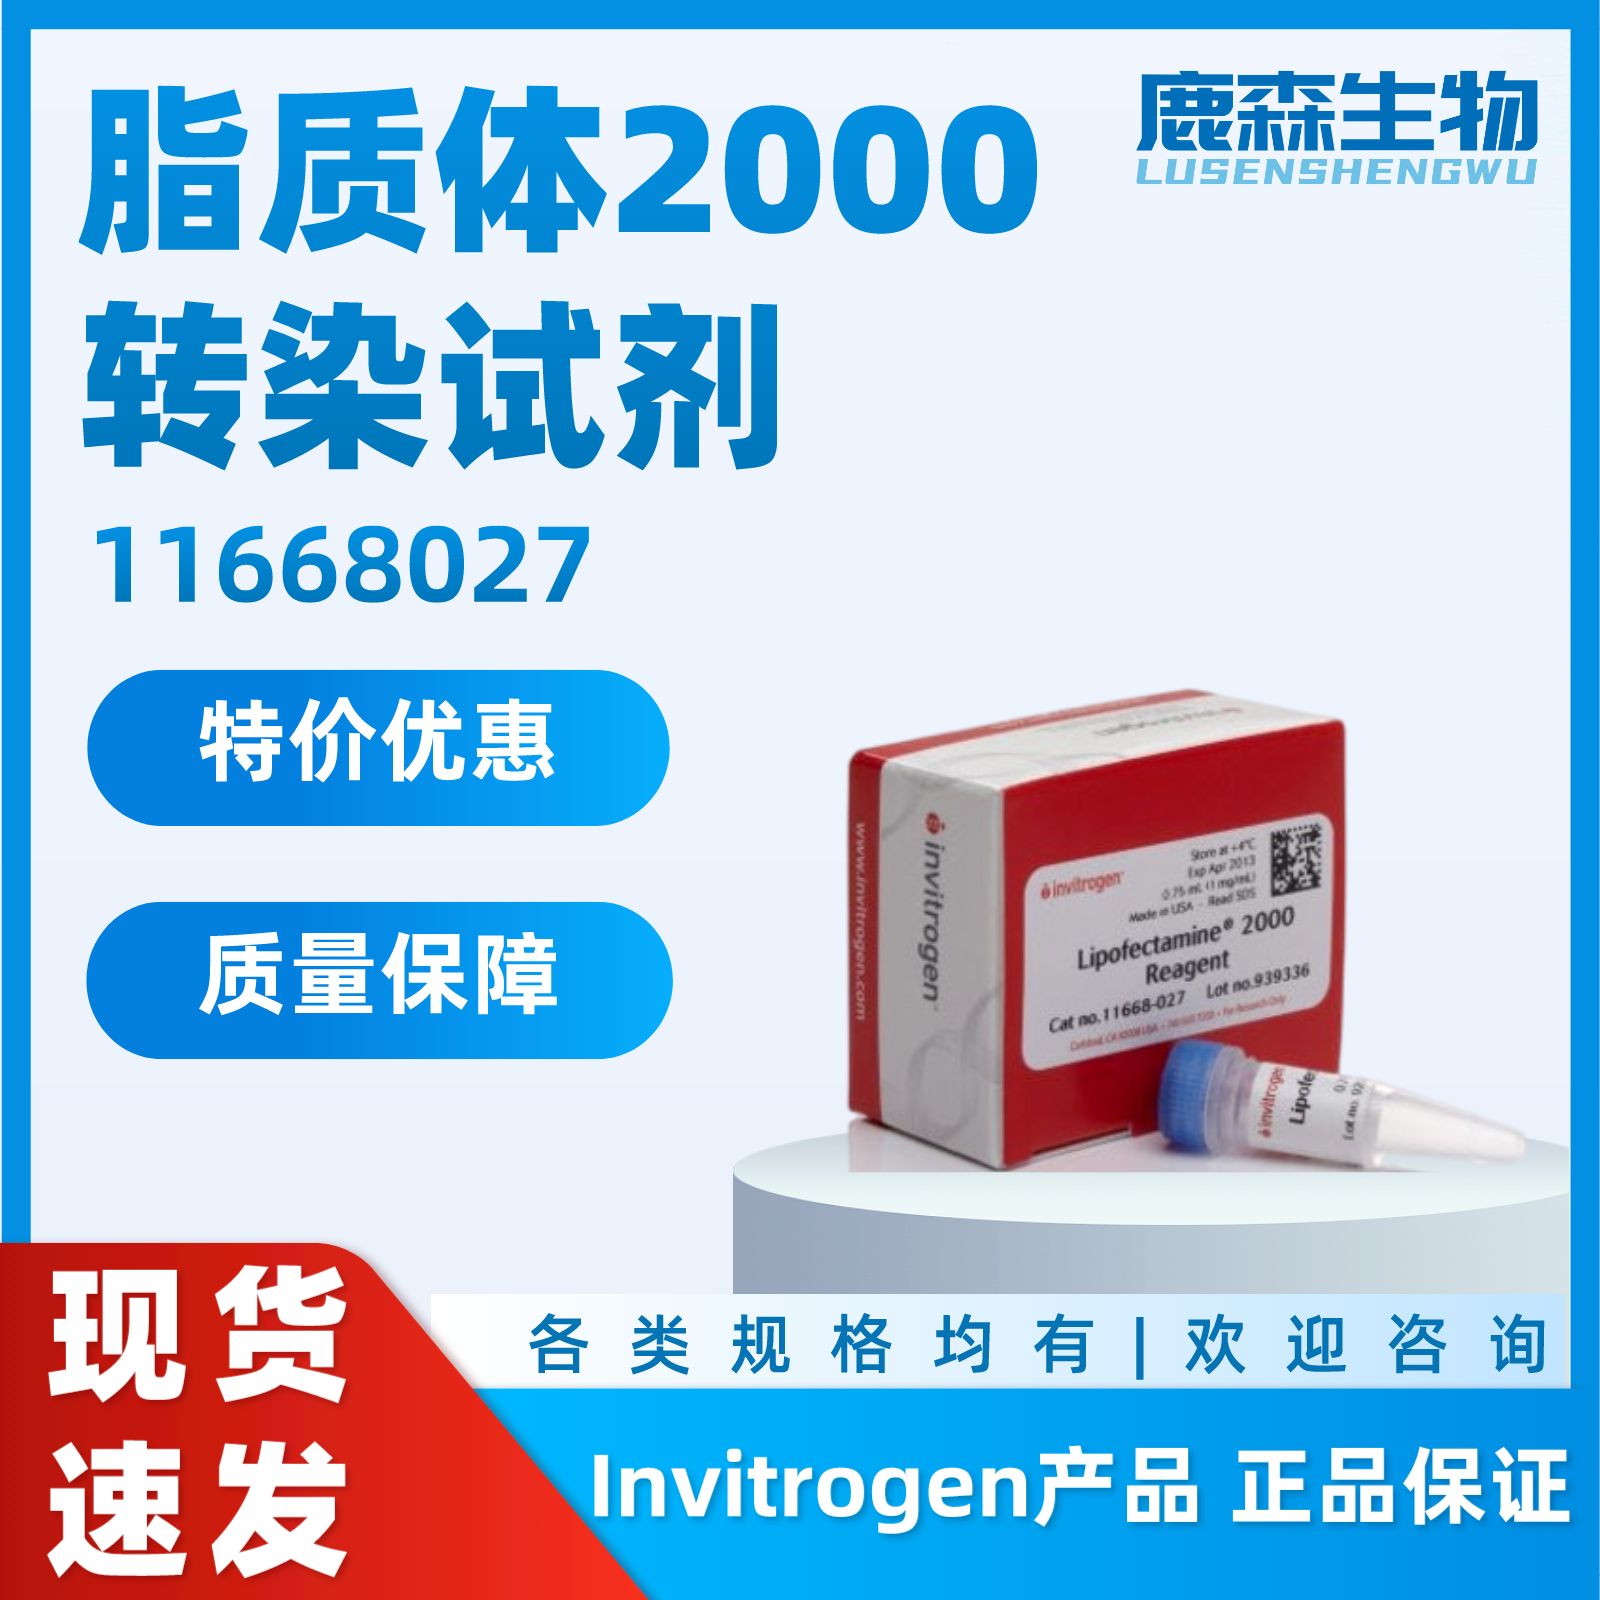 Lipofectamine 2000 Reagent|11668027